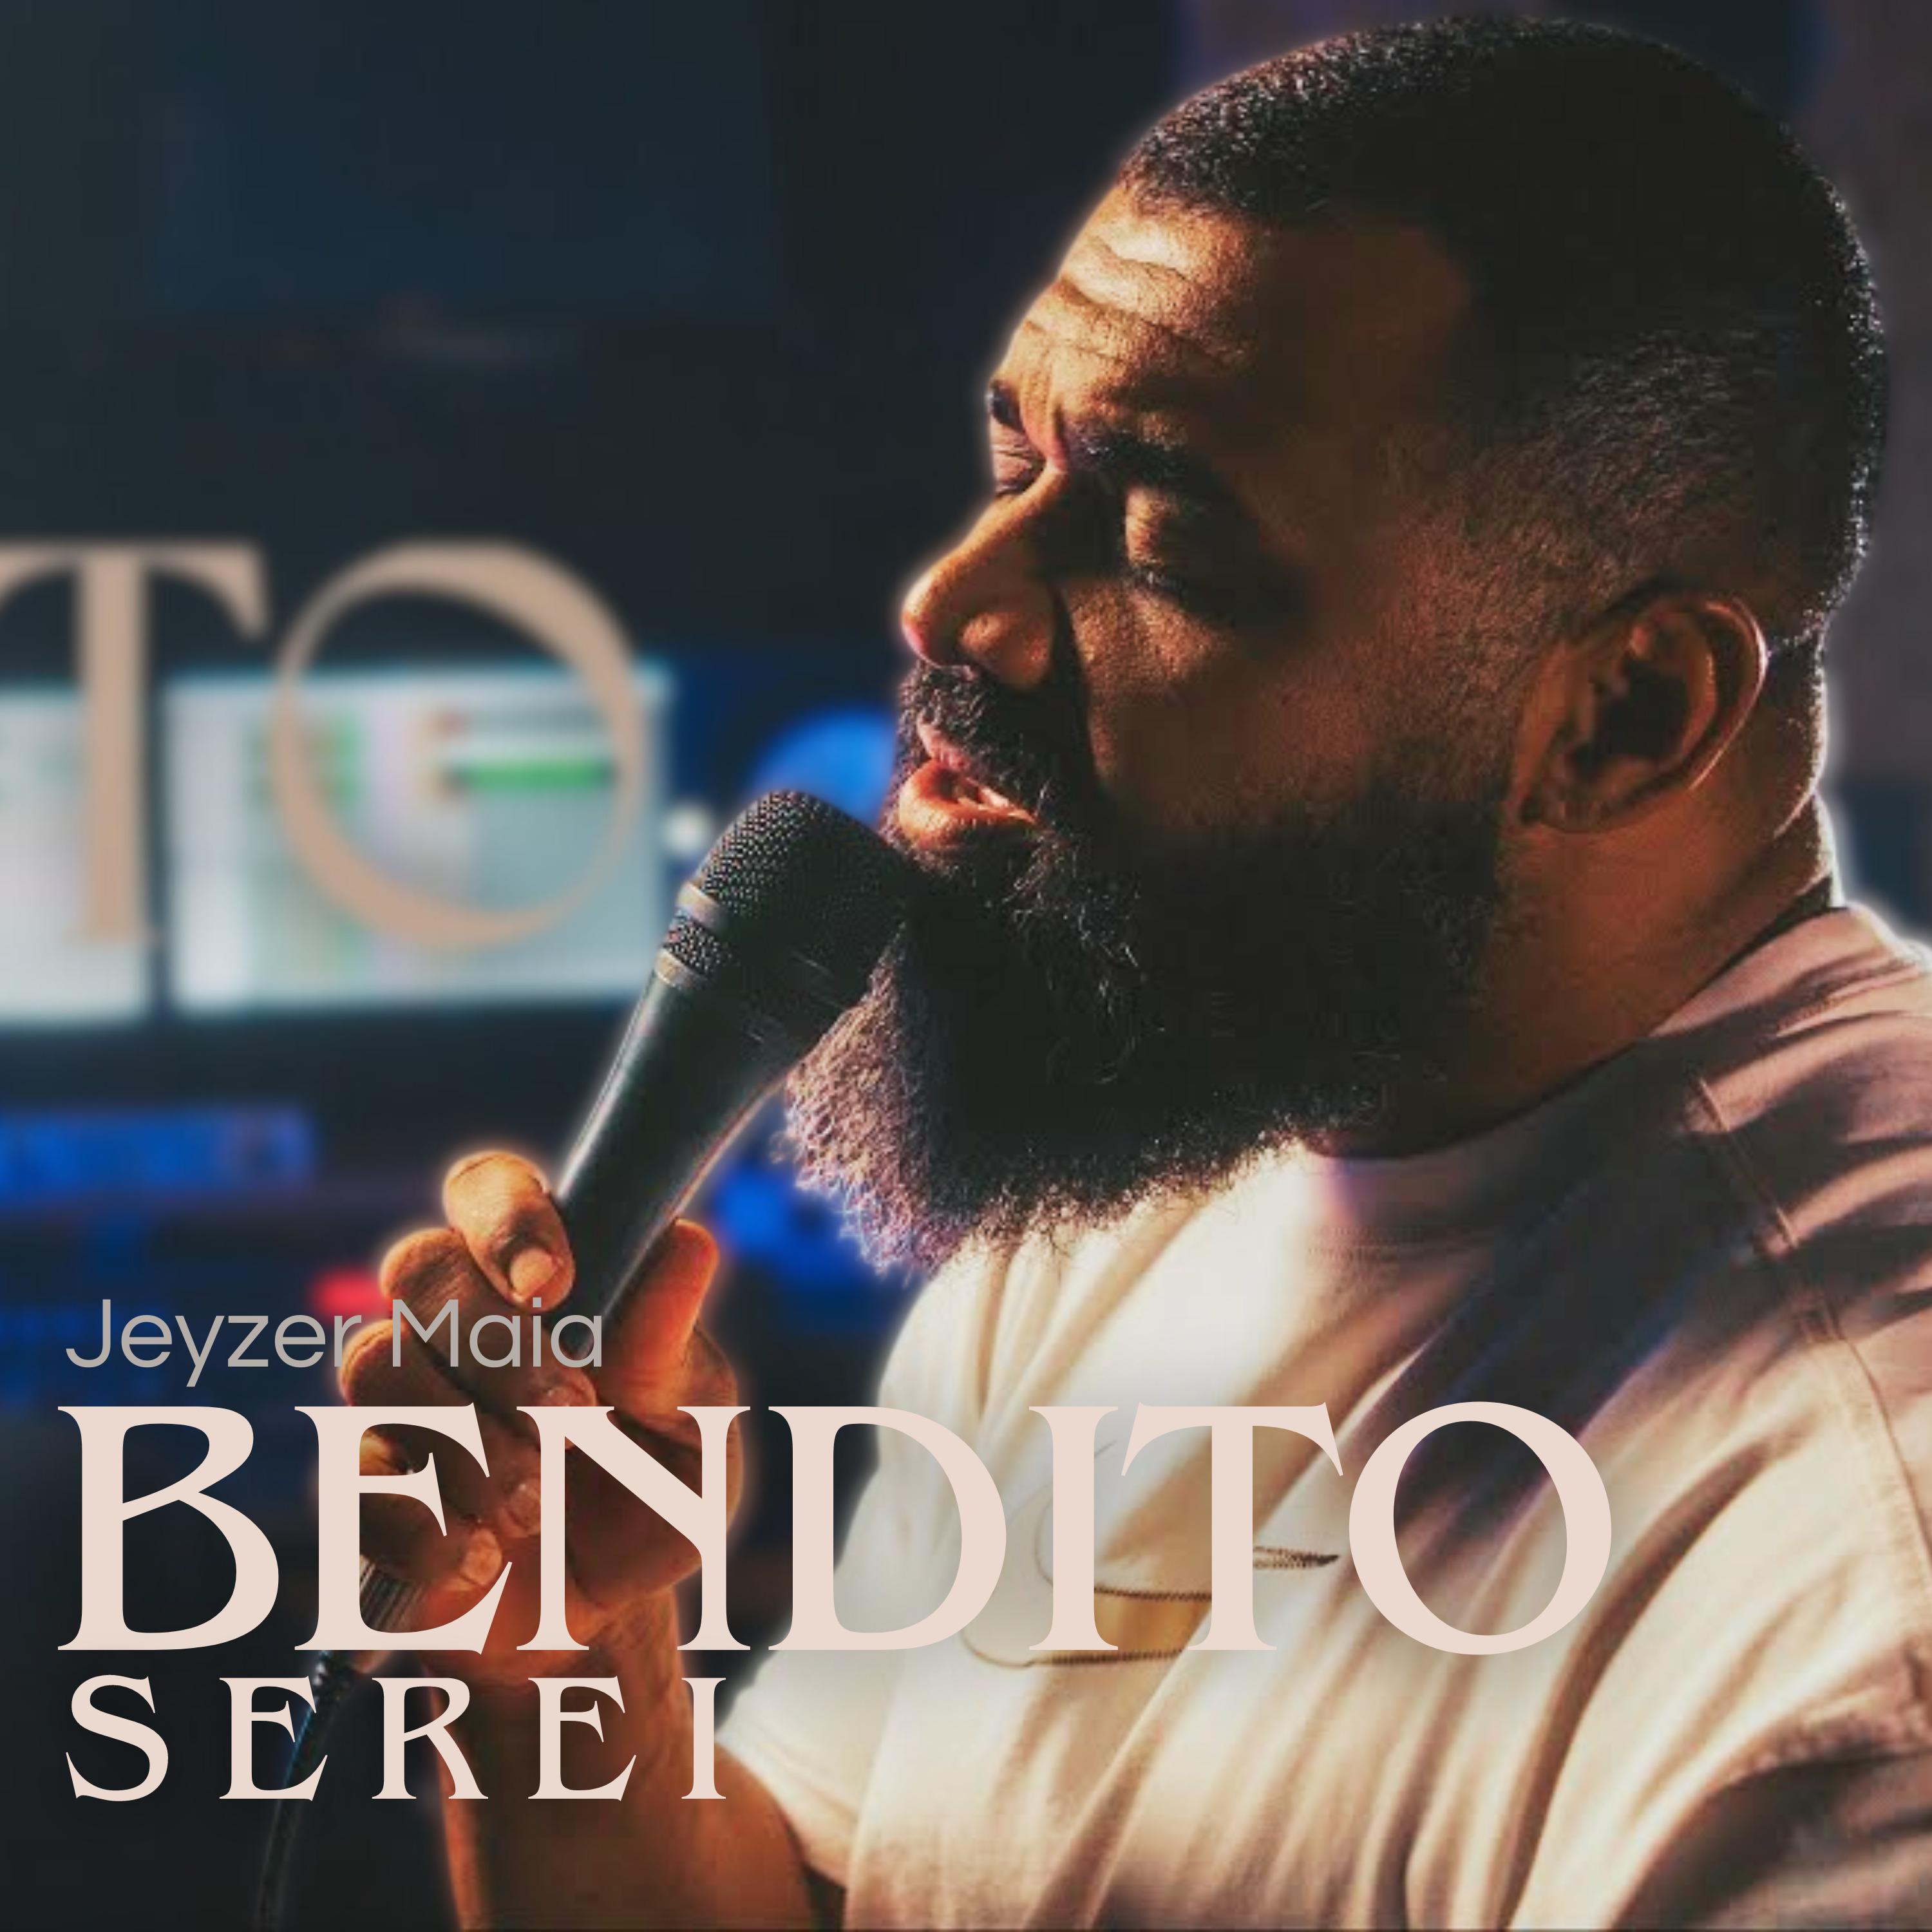 Постер альбома Bendito Serei